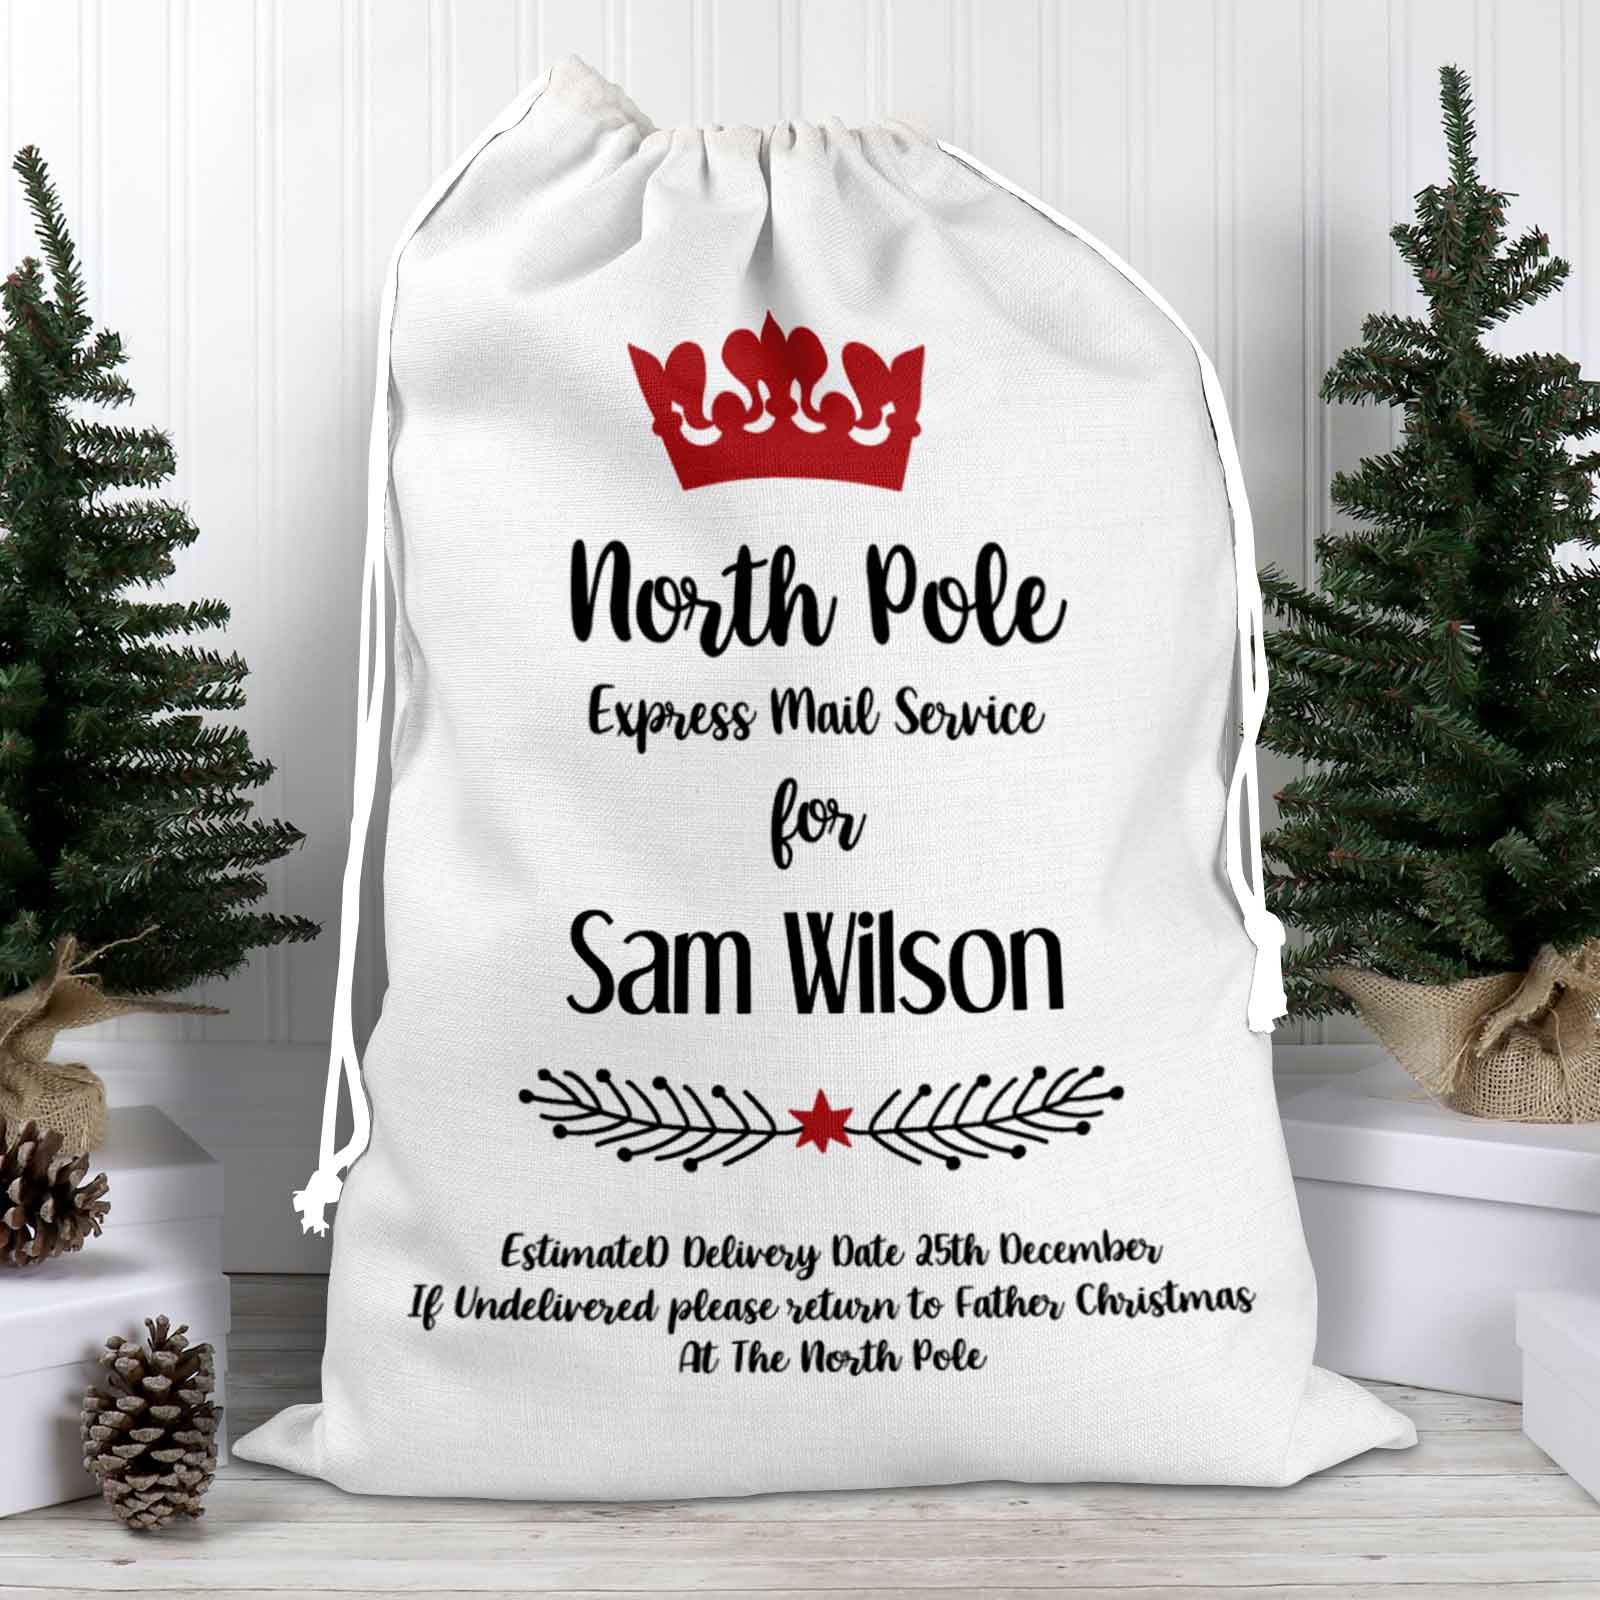 North Pole Express Mail Service Personalised Santa Sack